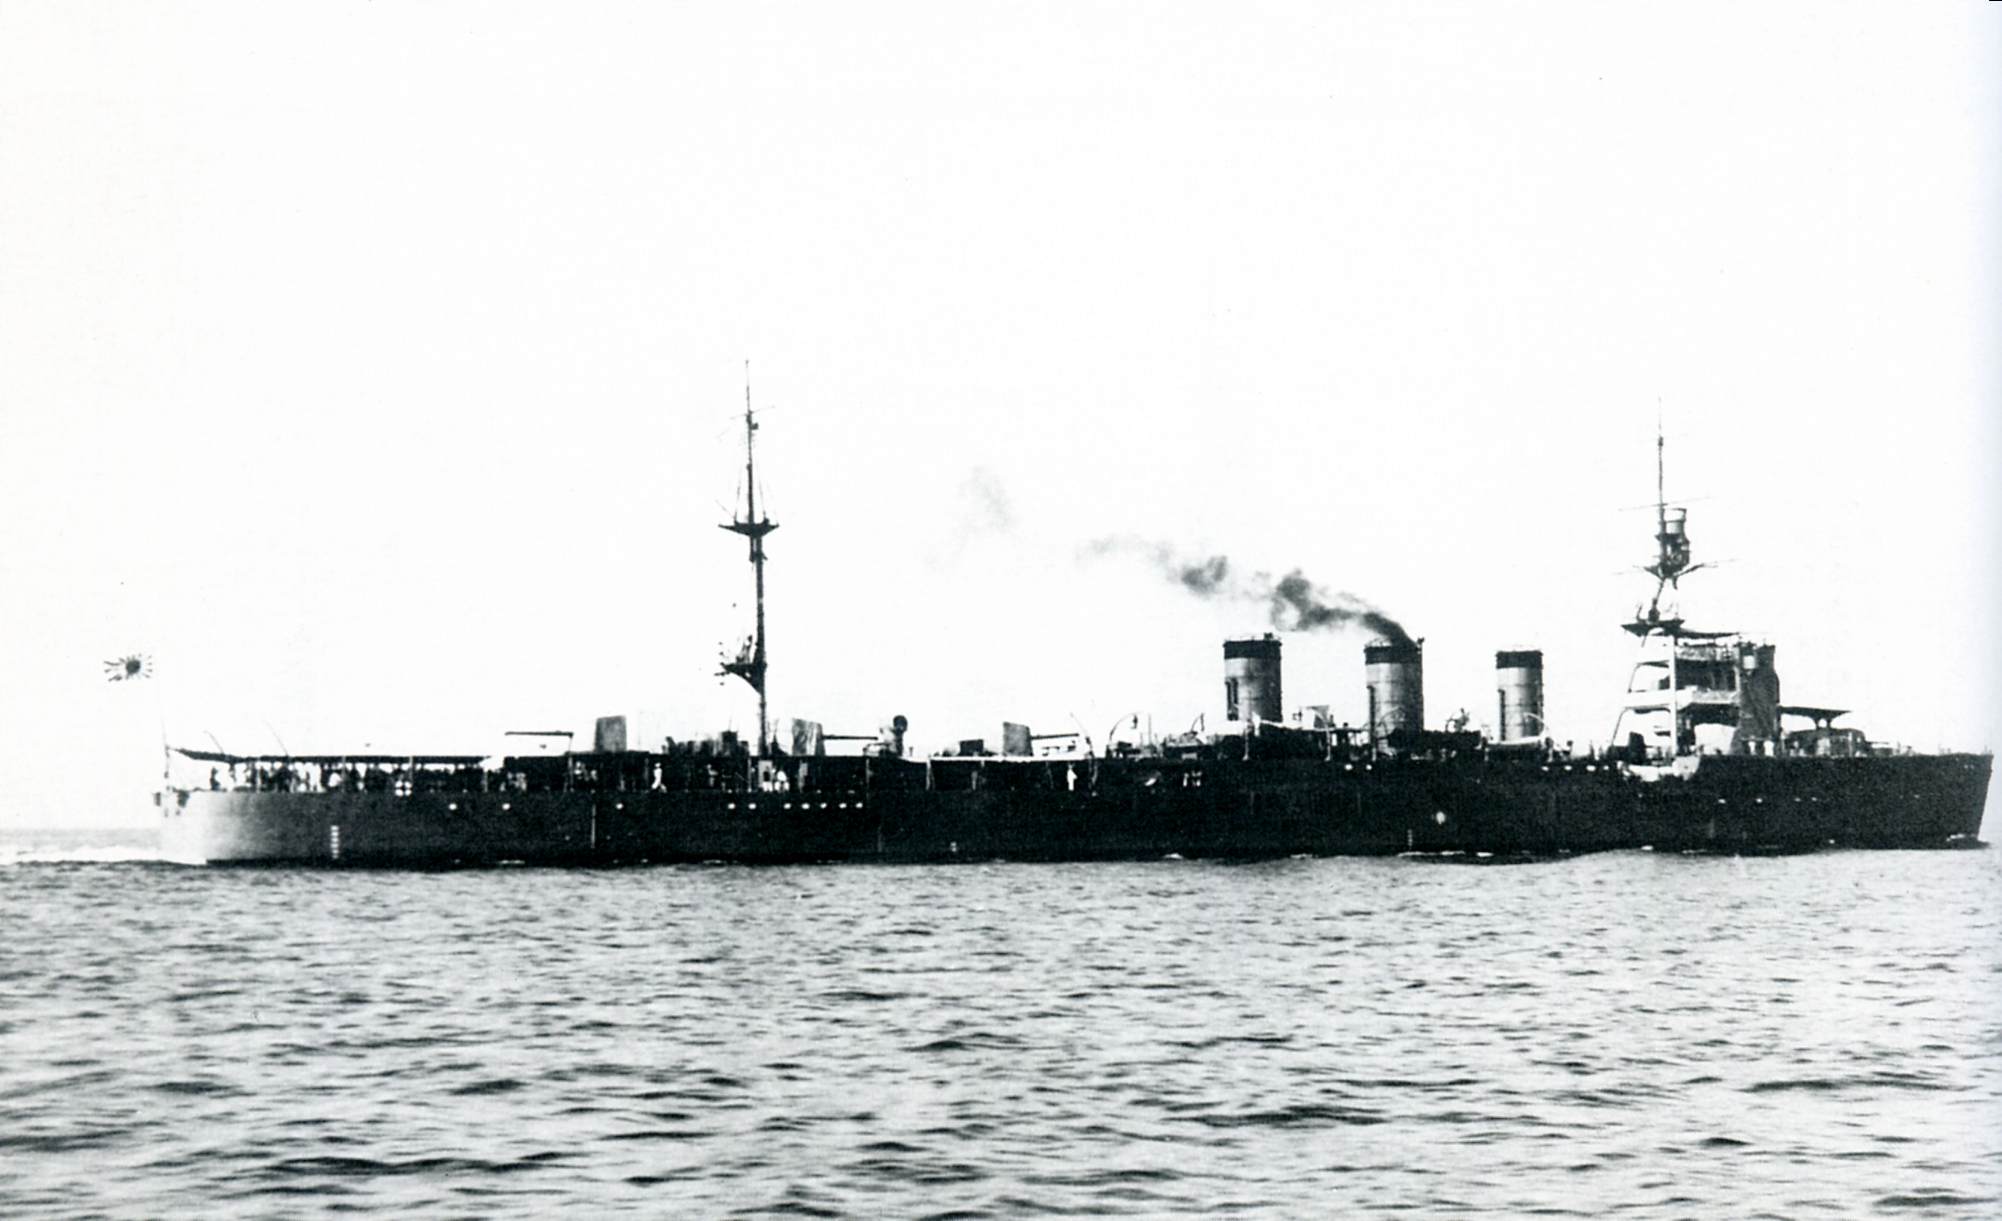 Natori off Nagasaki, Japan, 1922